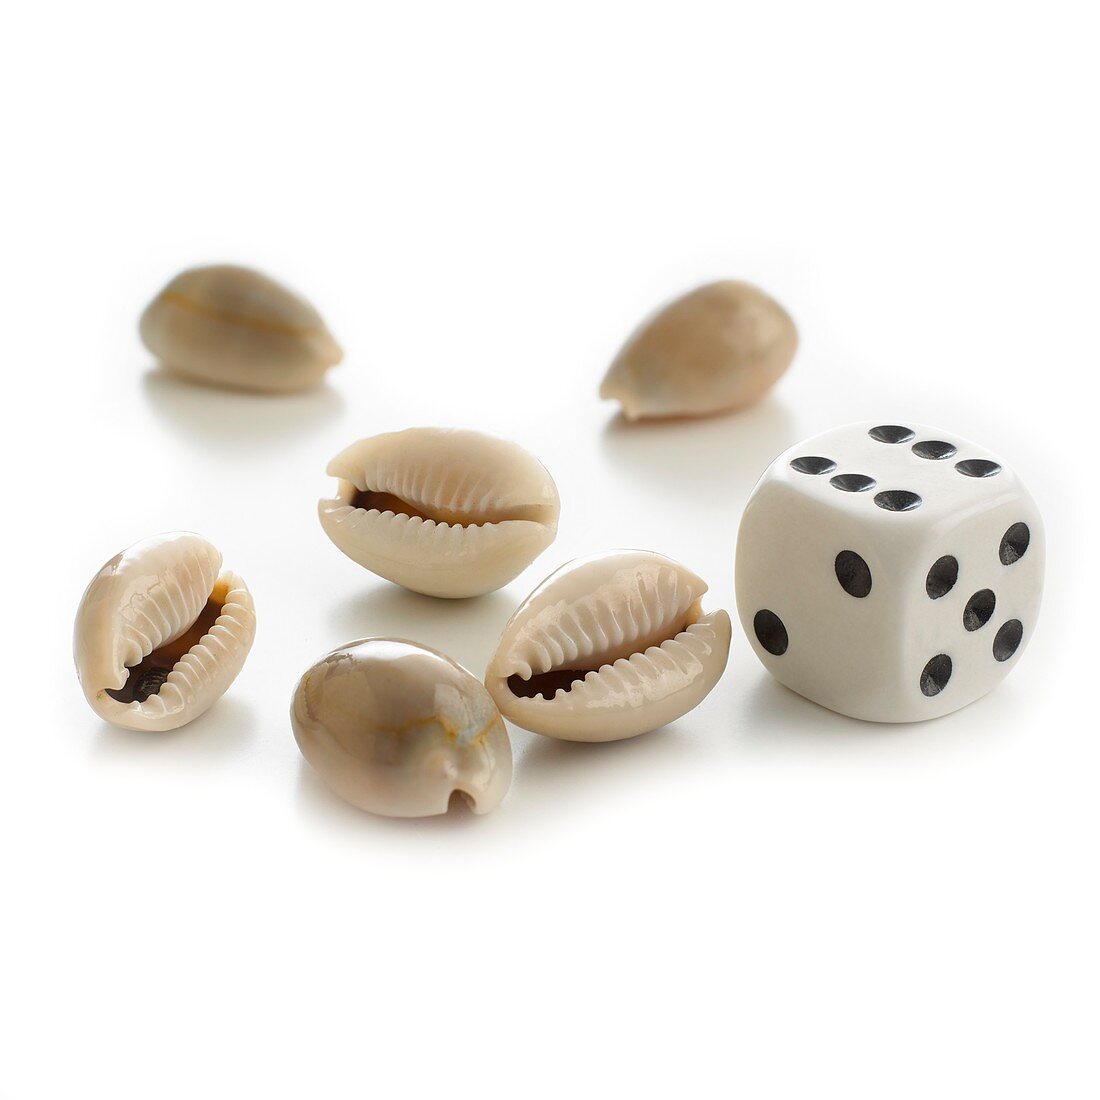 Money cowry sea shells and dice